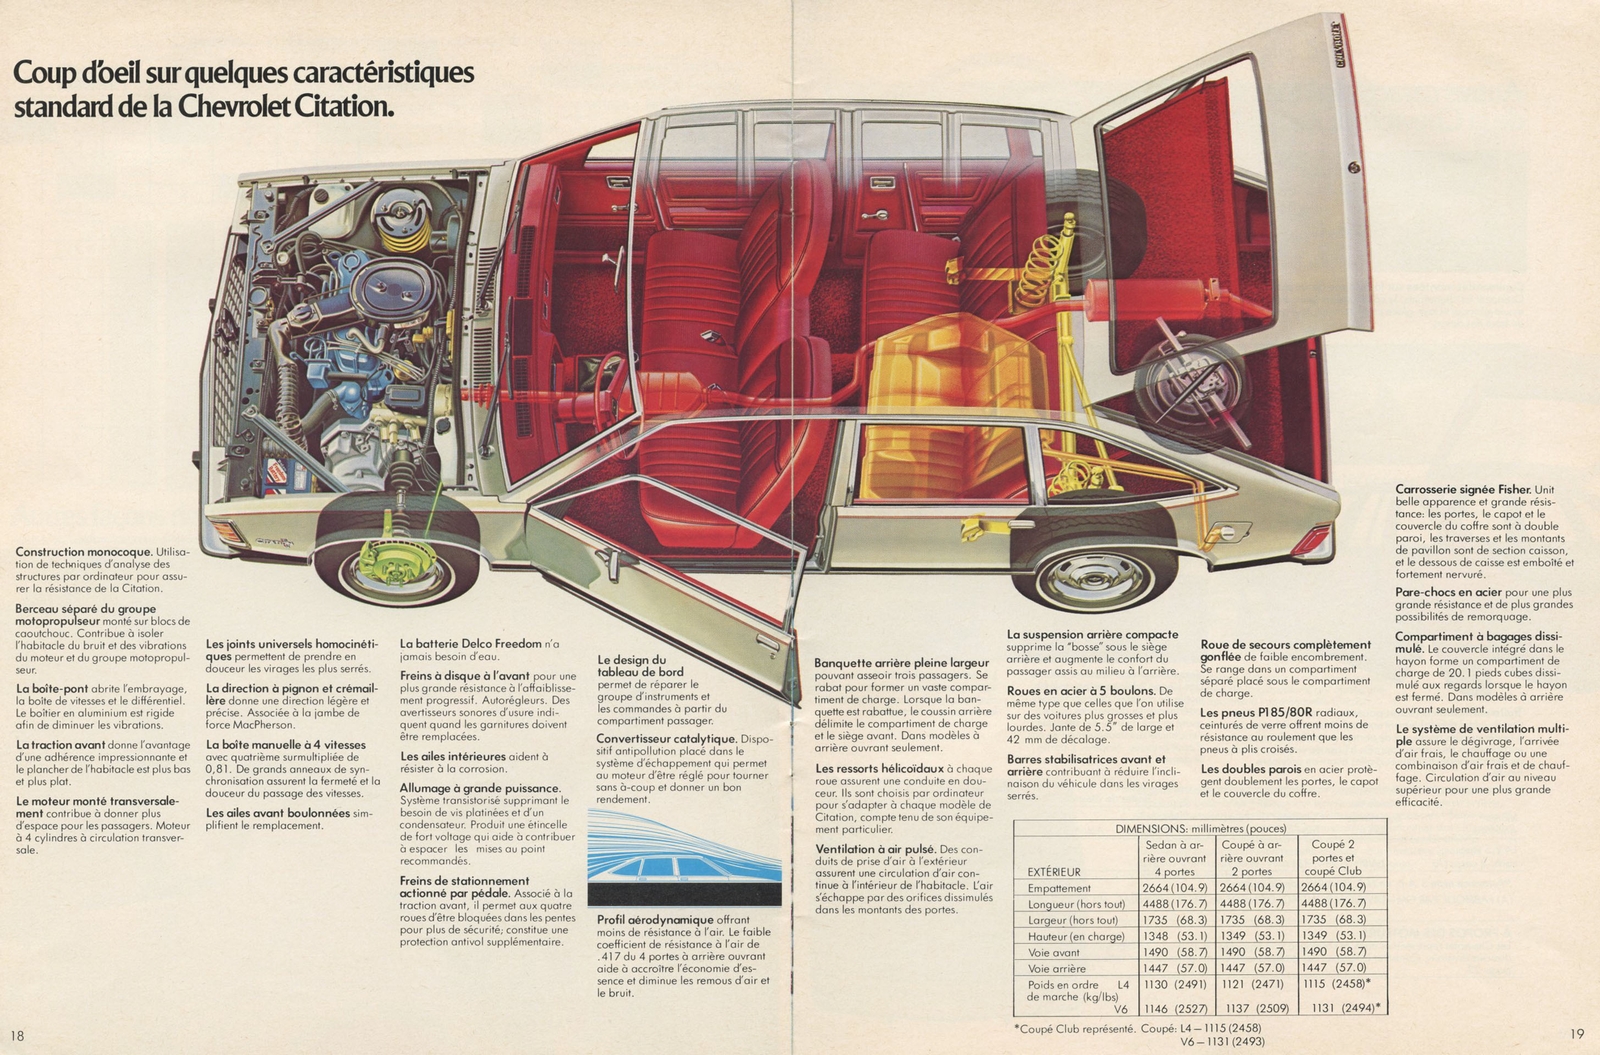 n_1980 Chevrolet Citation (Cdn-Fr)-18-19.jpg